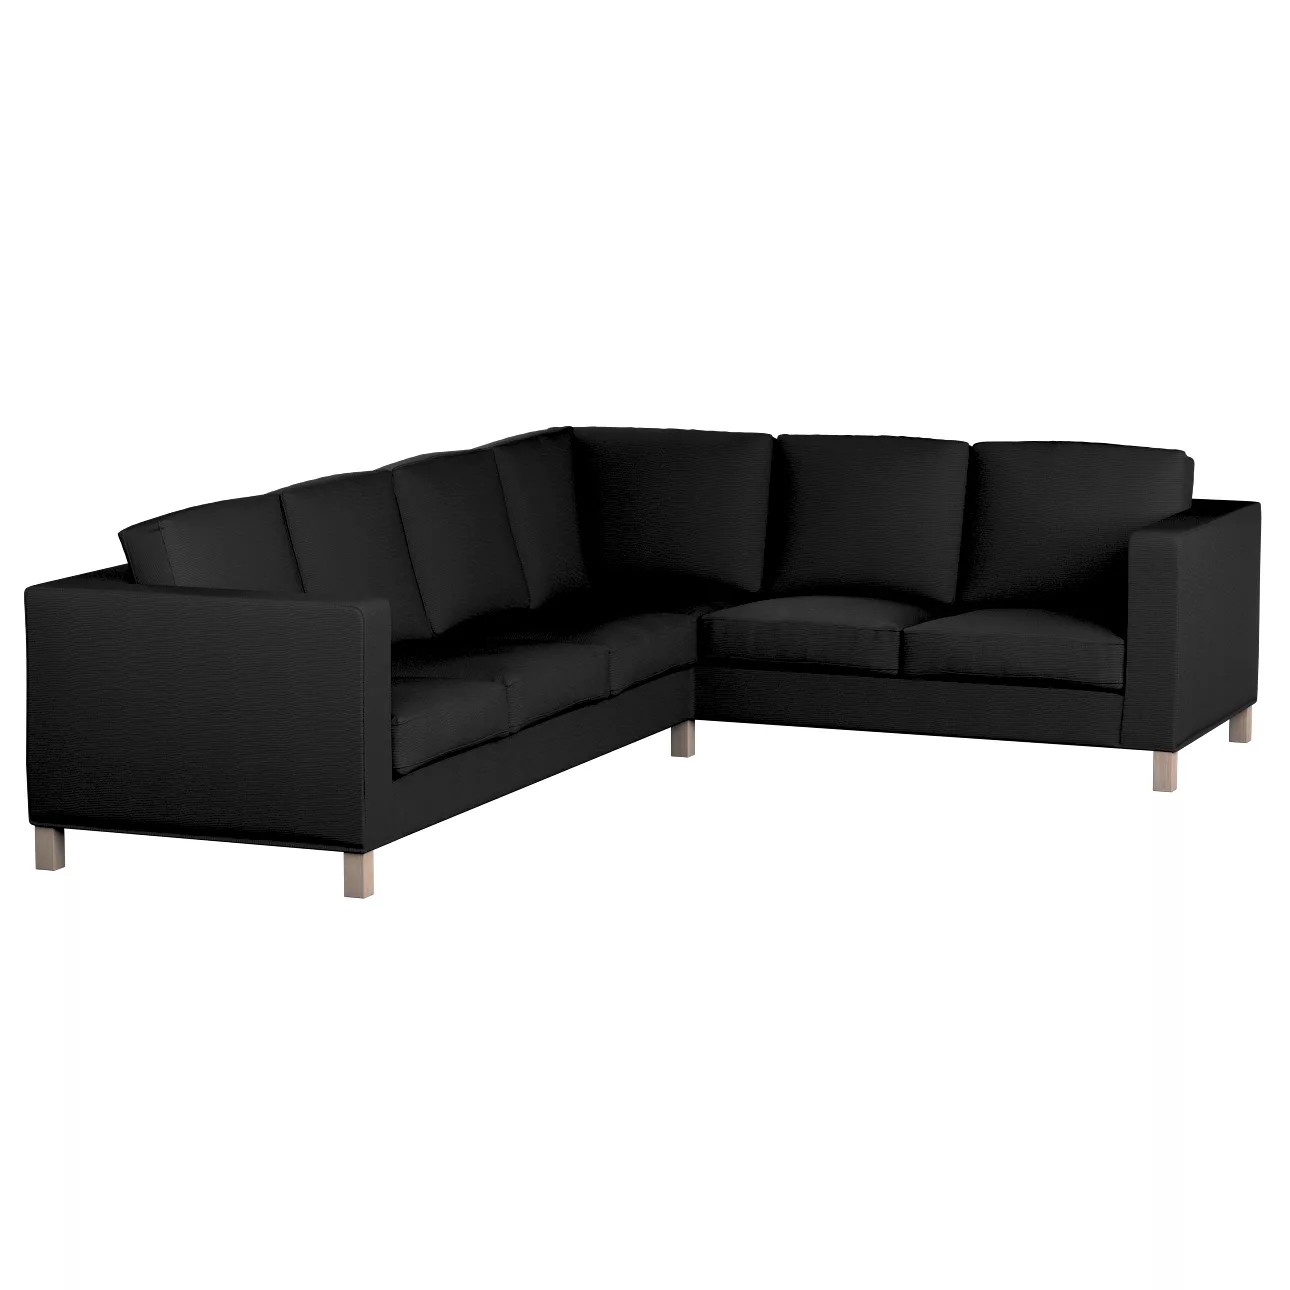 Bezug für Karlanda Sofa Ecke links, schwarz, 36cm x 30cm x 50cm, Etna (705- günstig online kaufen